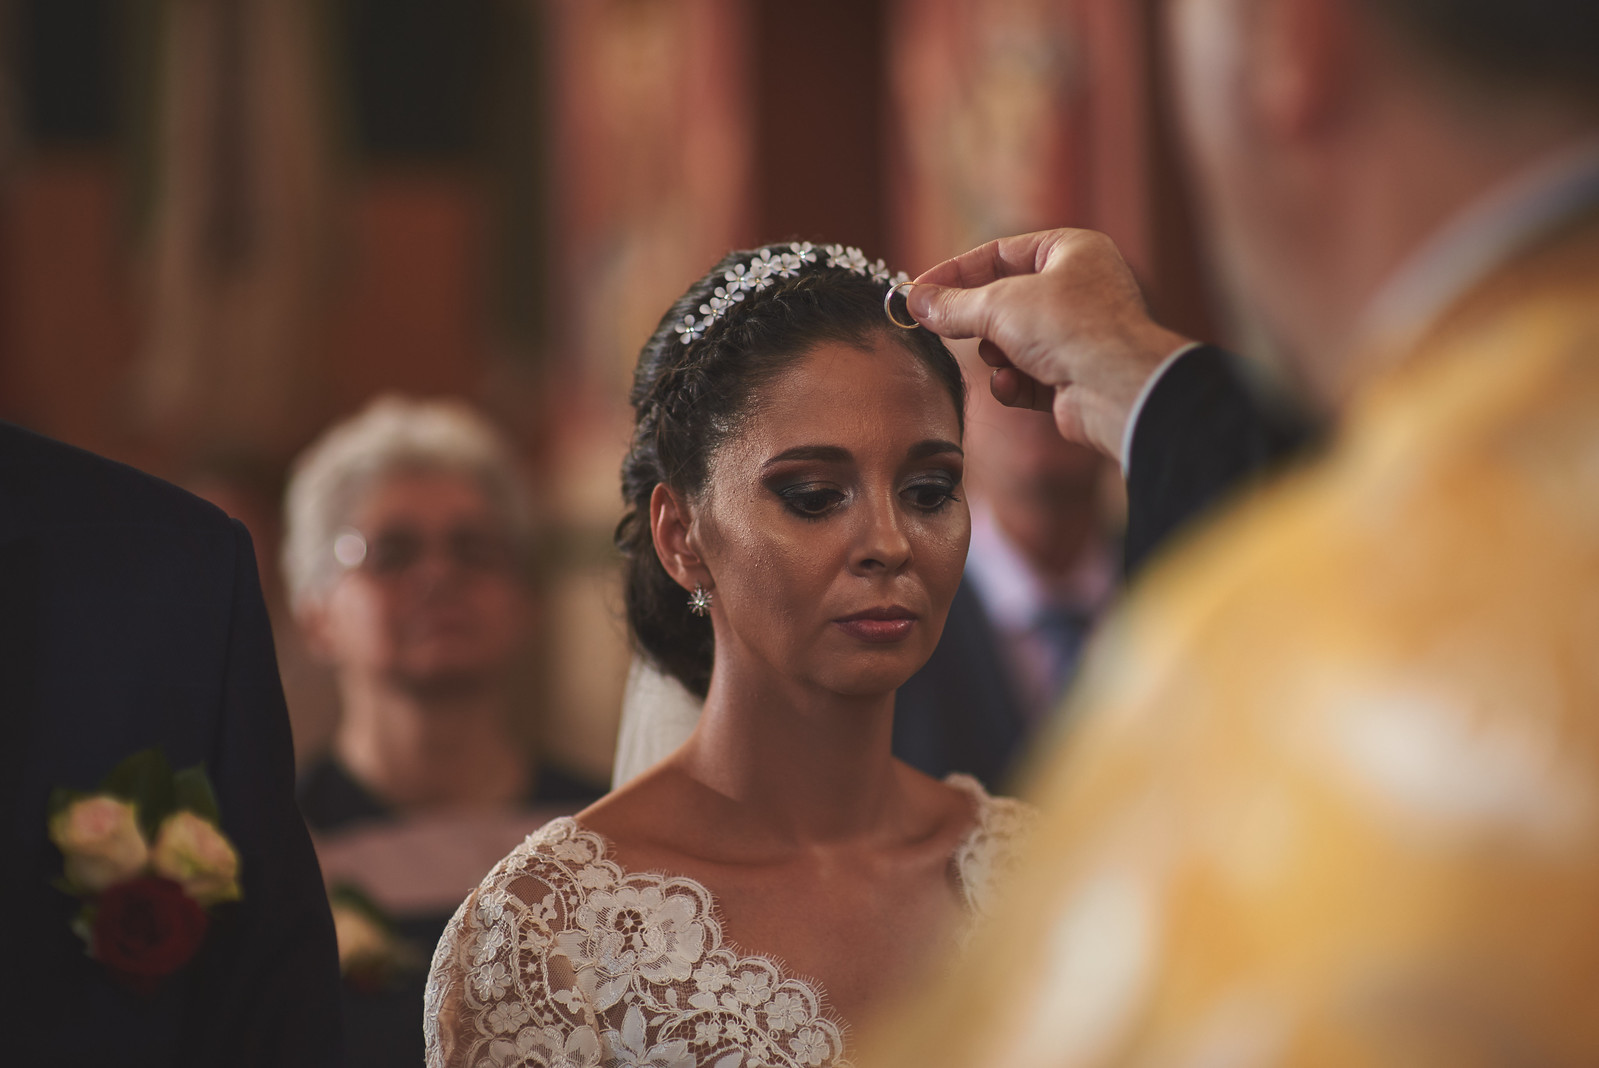 epspictures, Bucharest Wedding Photography